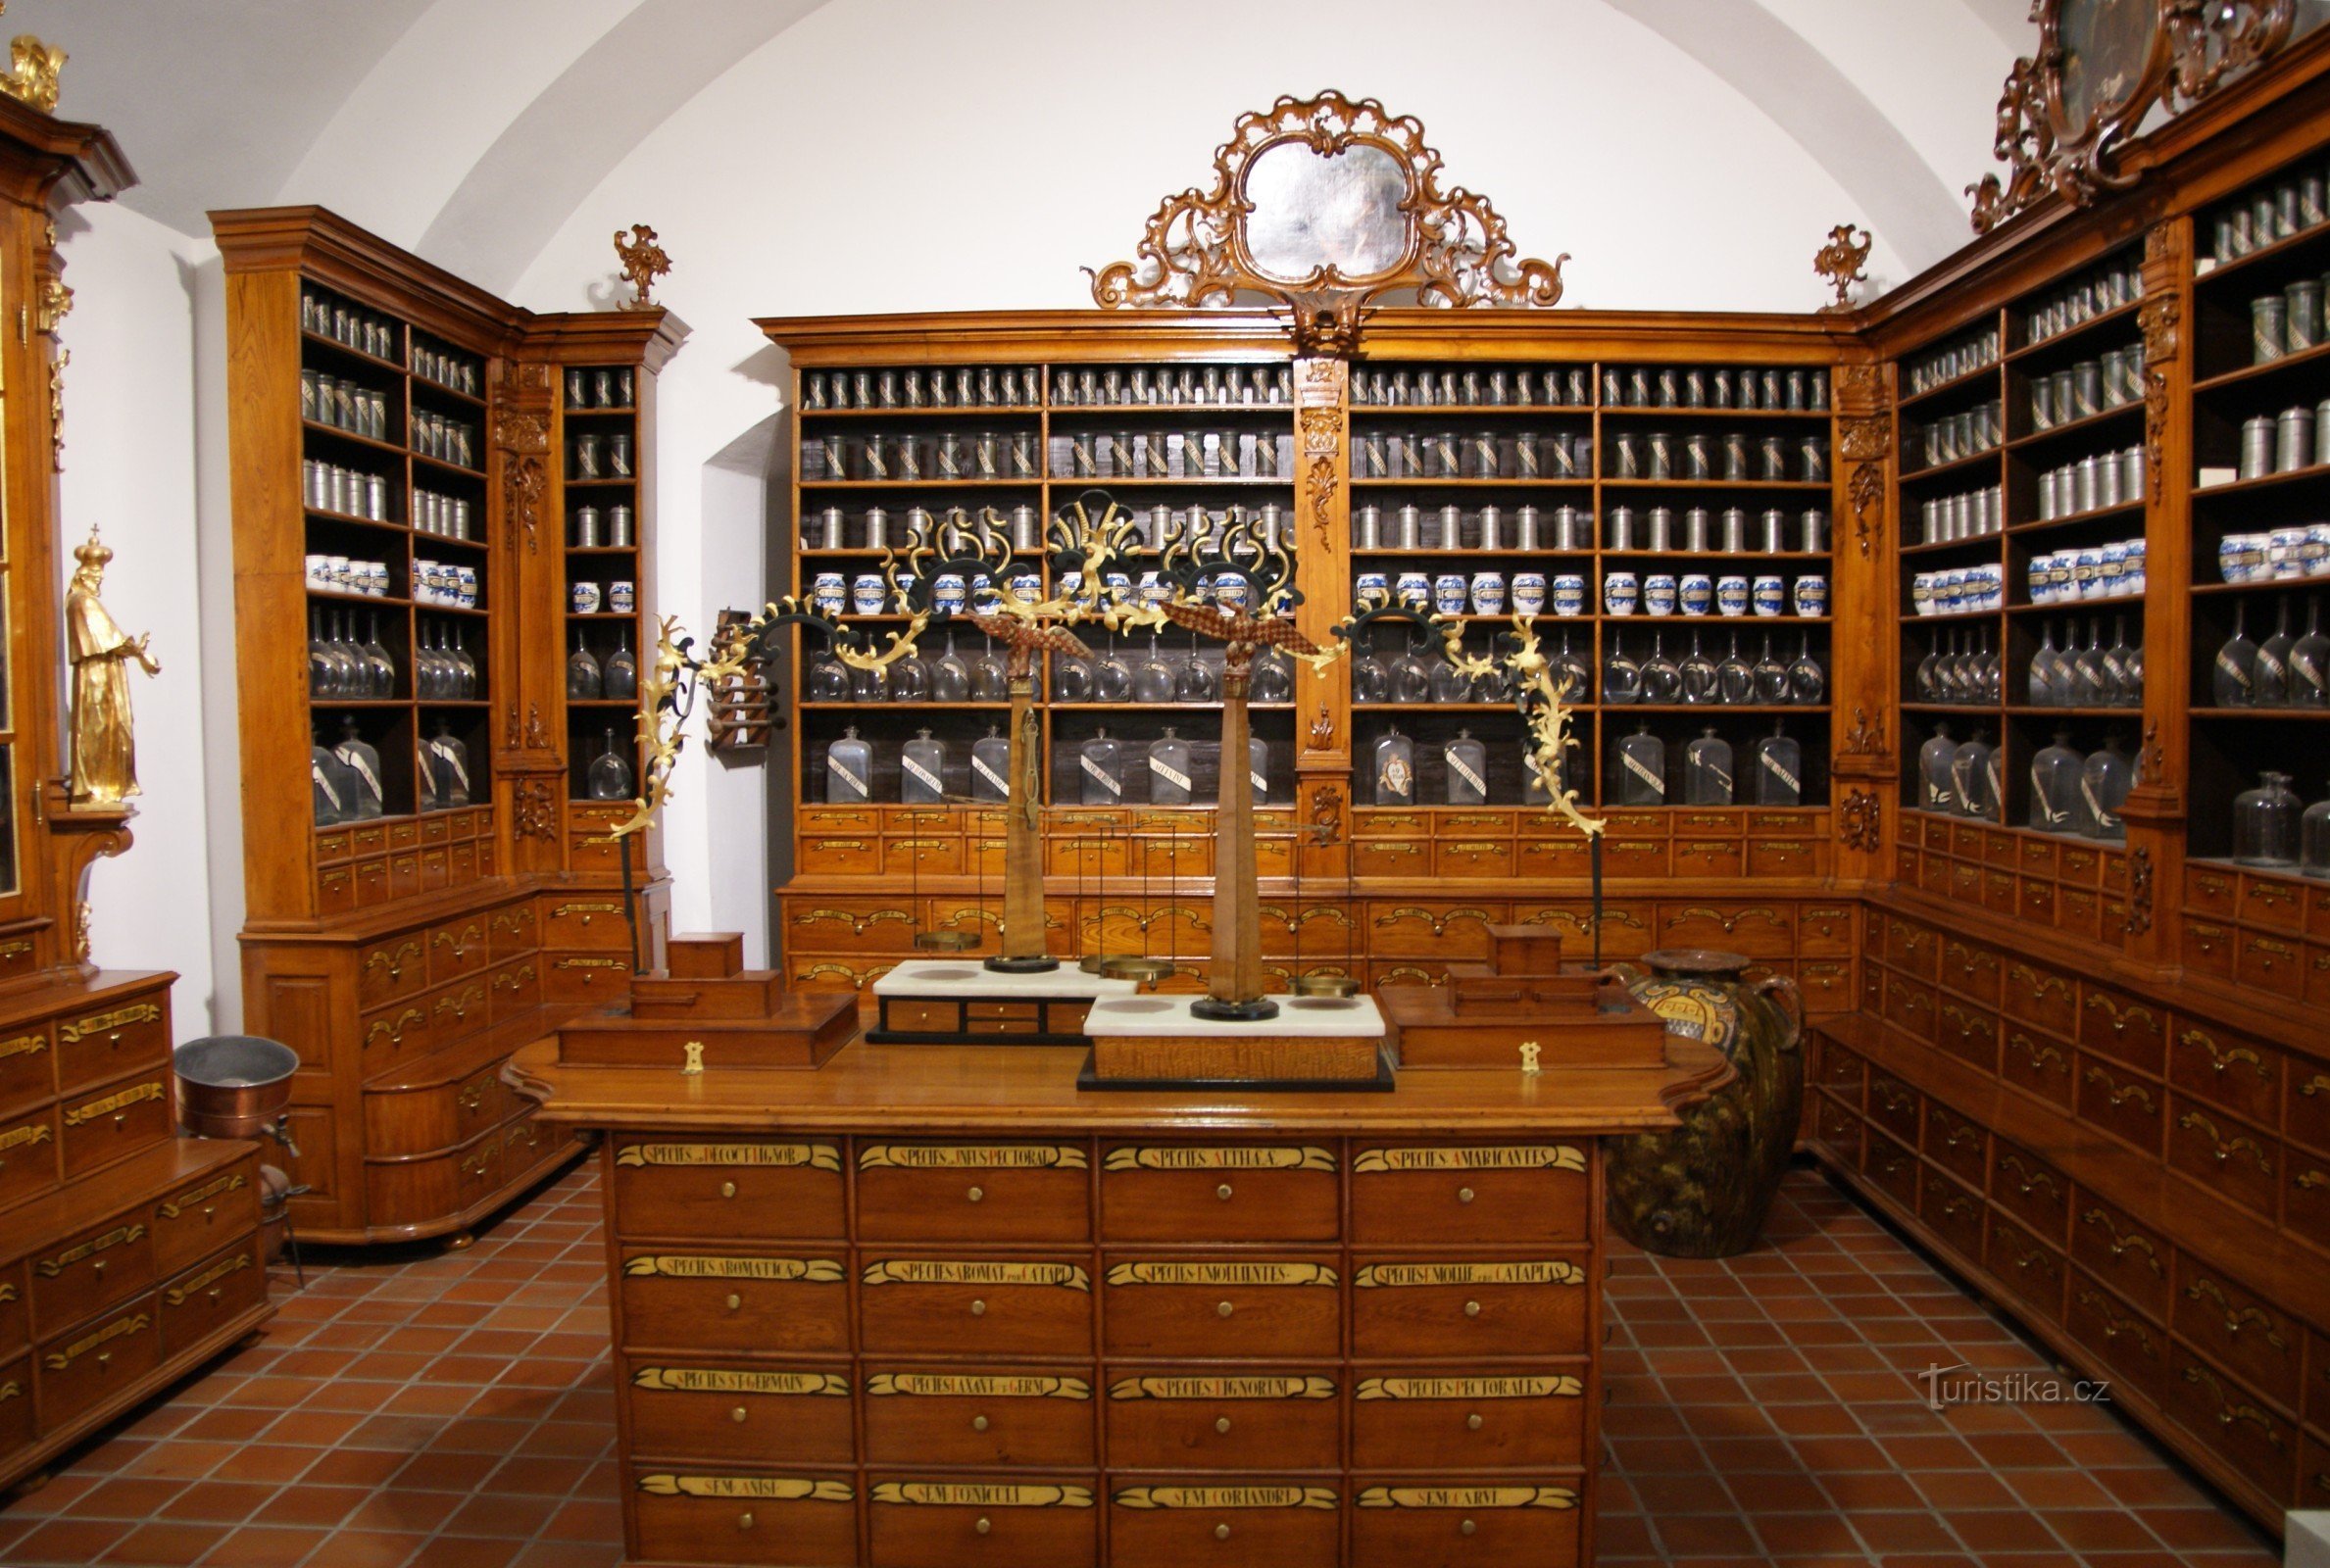 Brno (Špilberk) – baroque pharmacy